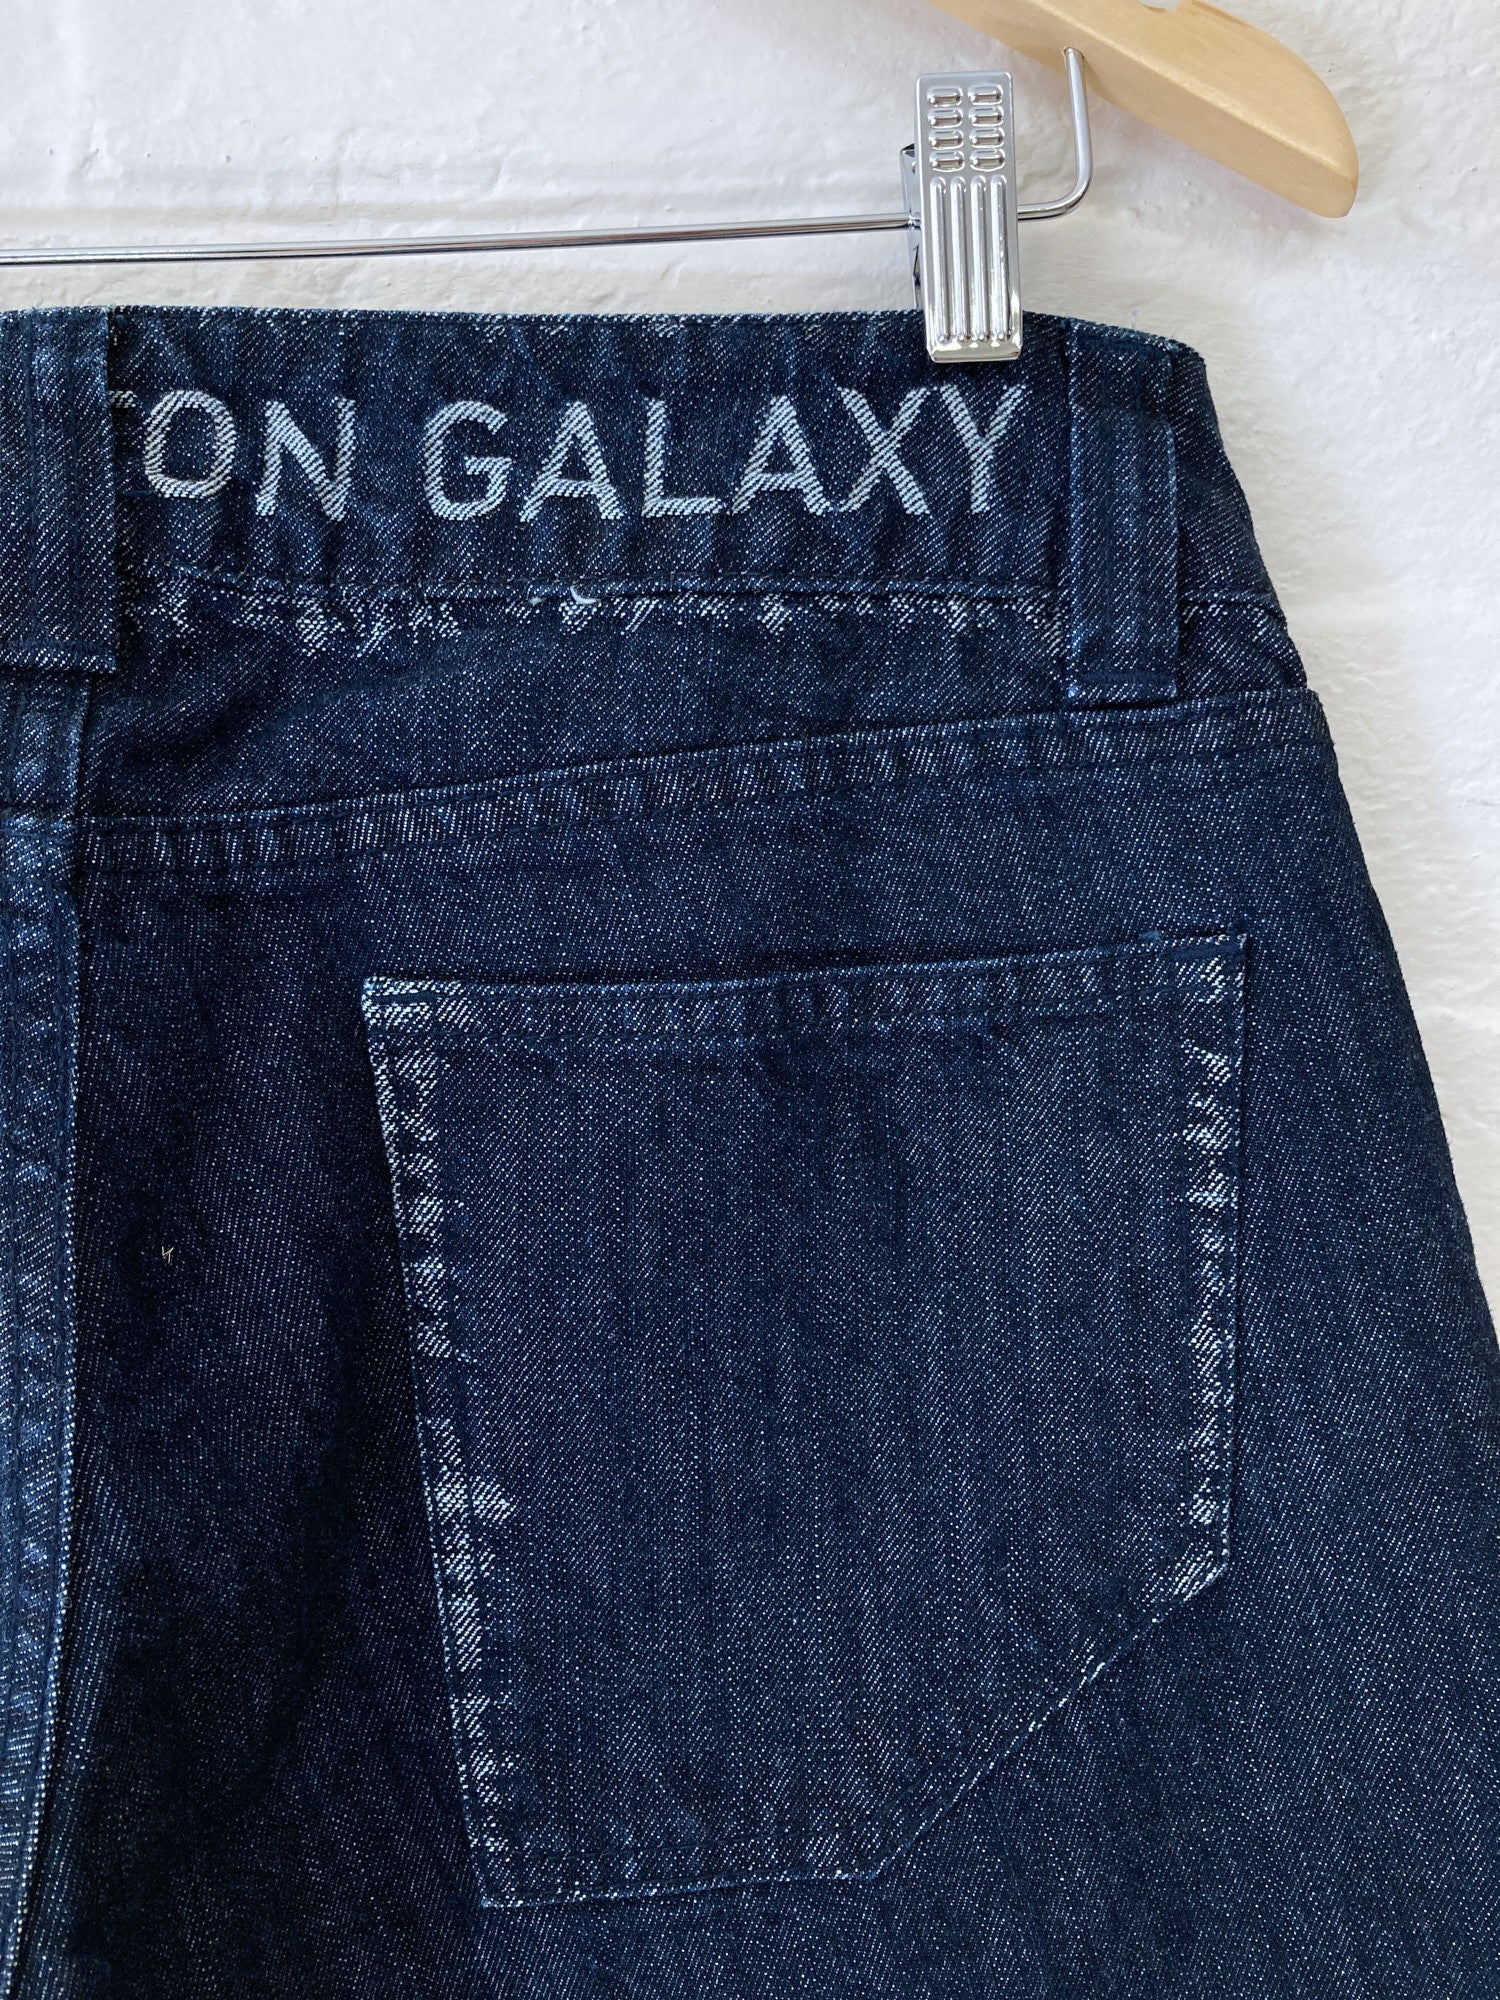 Issey Miyake ‘A.POC cotton galaxy’ indigo denim very wide leg jeans - sz 4 L M